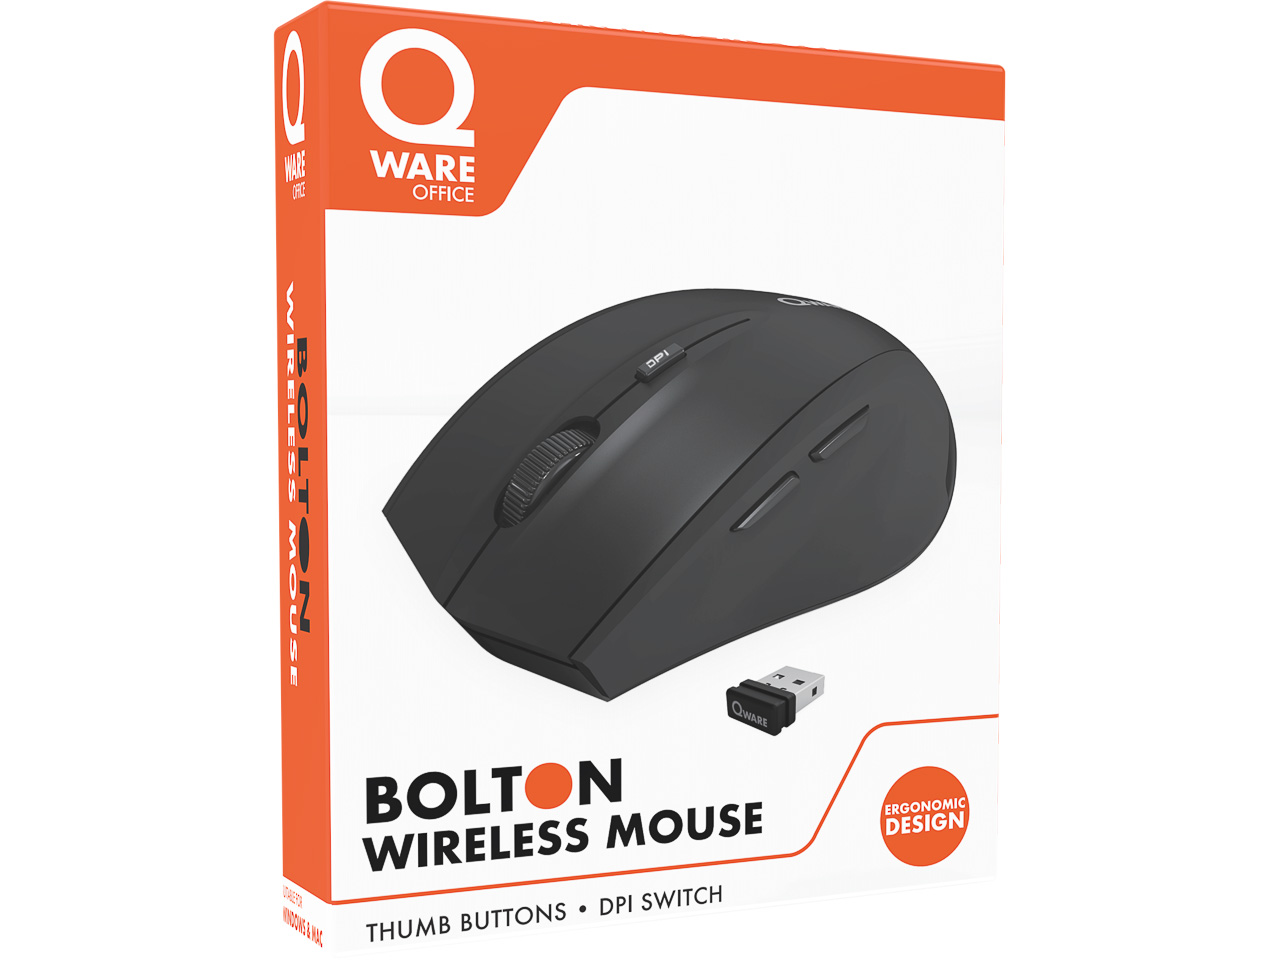 QWARE OFFICE BOLTON MOUSE BLACK QW PCM-130BL 5buttons USB wirelesss 1